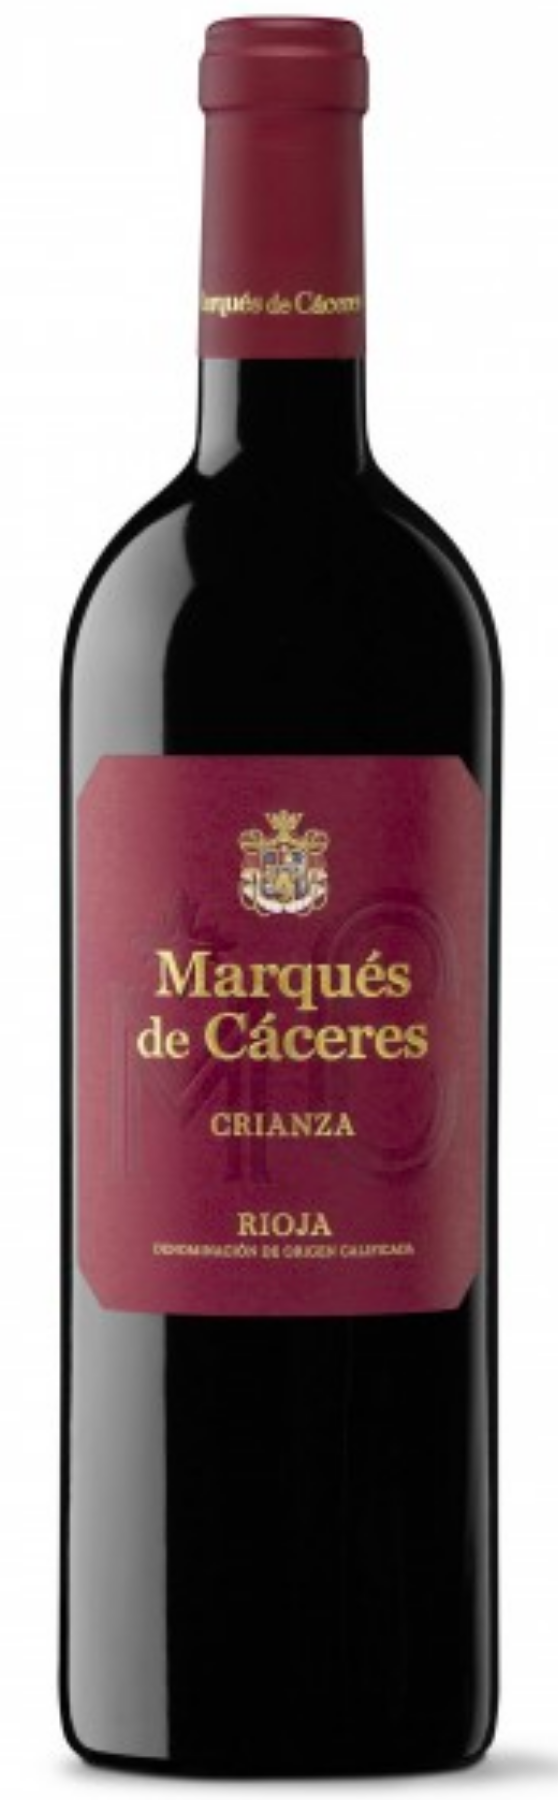 Marqués de Cáceres Crianza Rioja | 2018 | trocken | Rotwein | Vinoscout